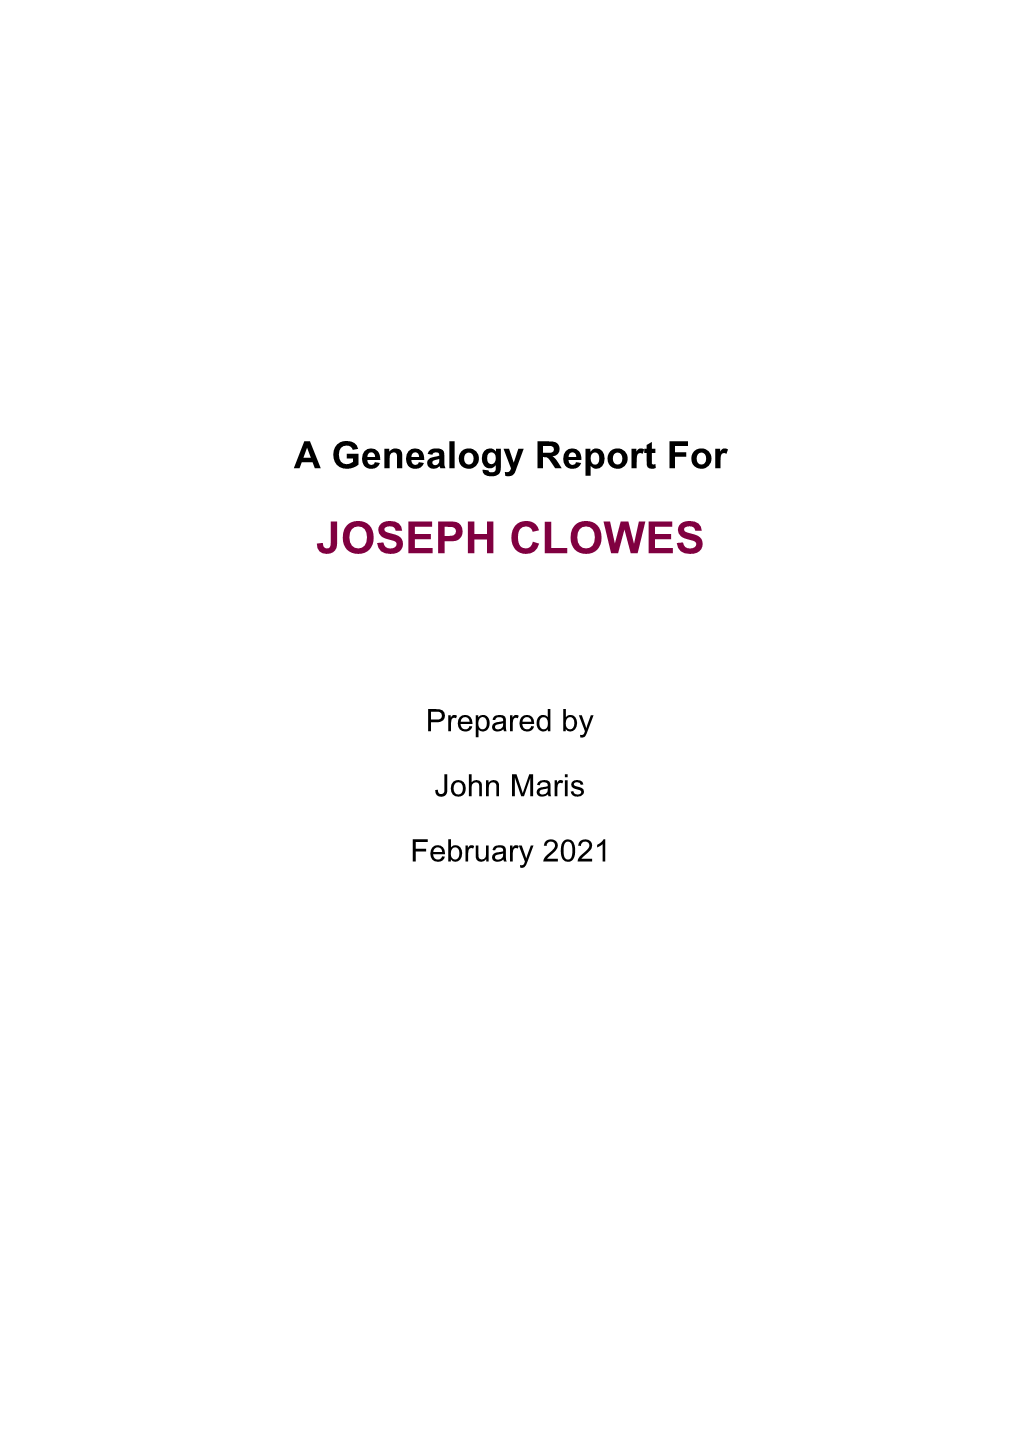 Joseph Clowes